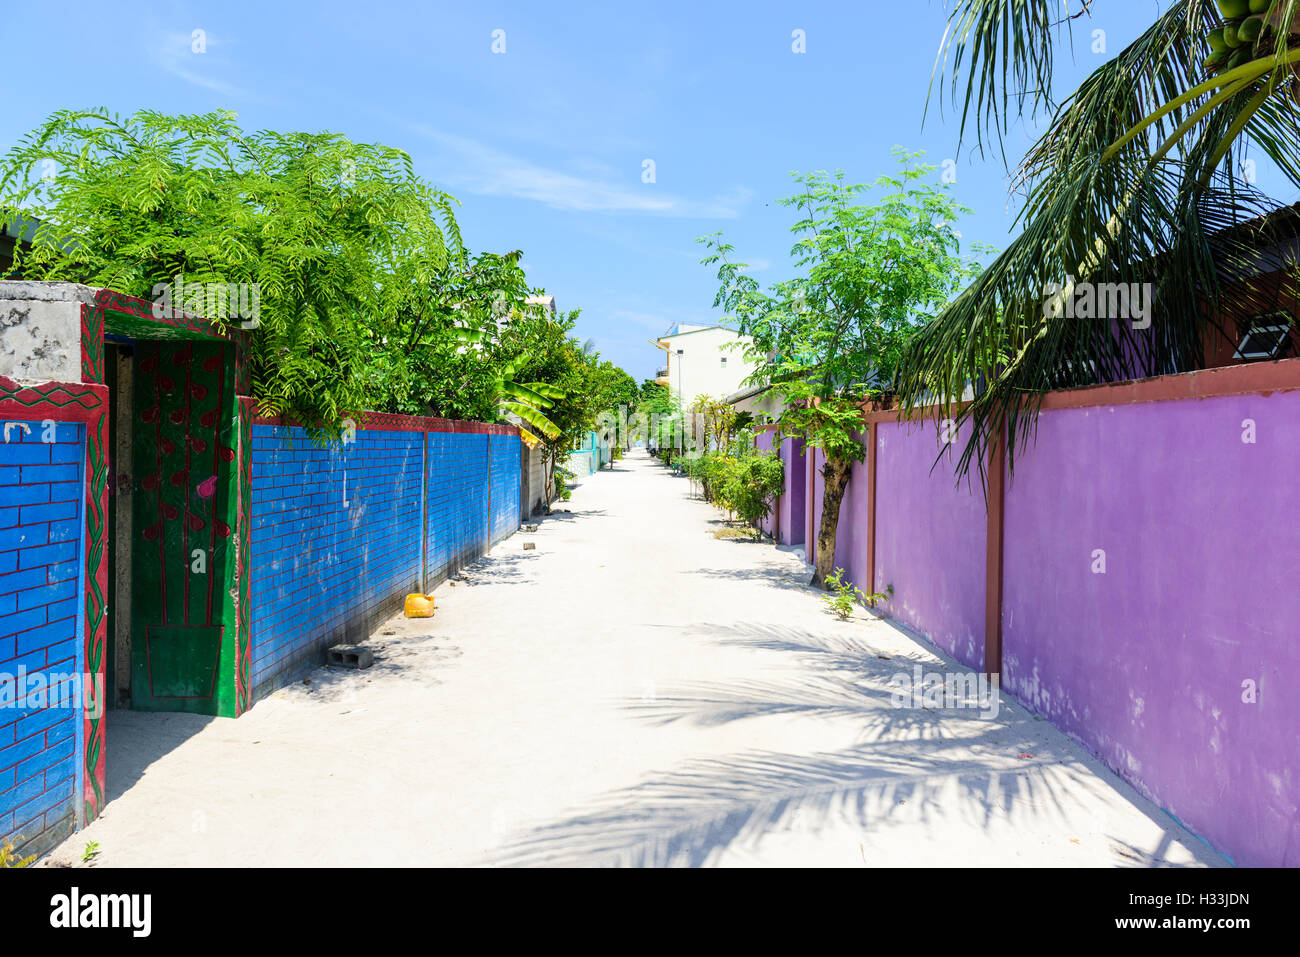 Maldives Island Empty Street Of A Fishermen Island Stock Photo